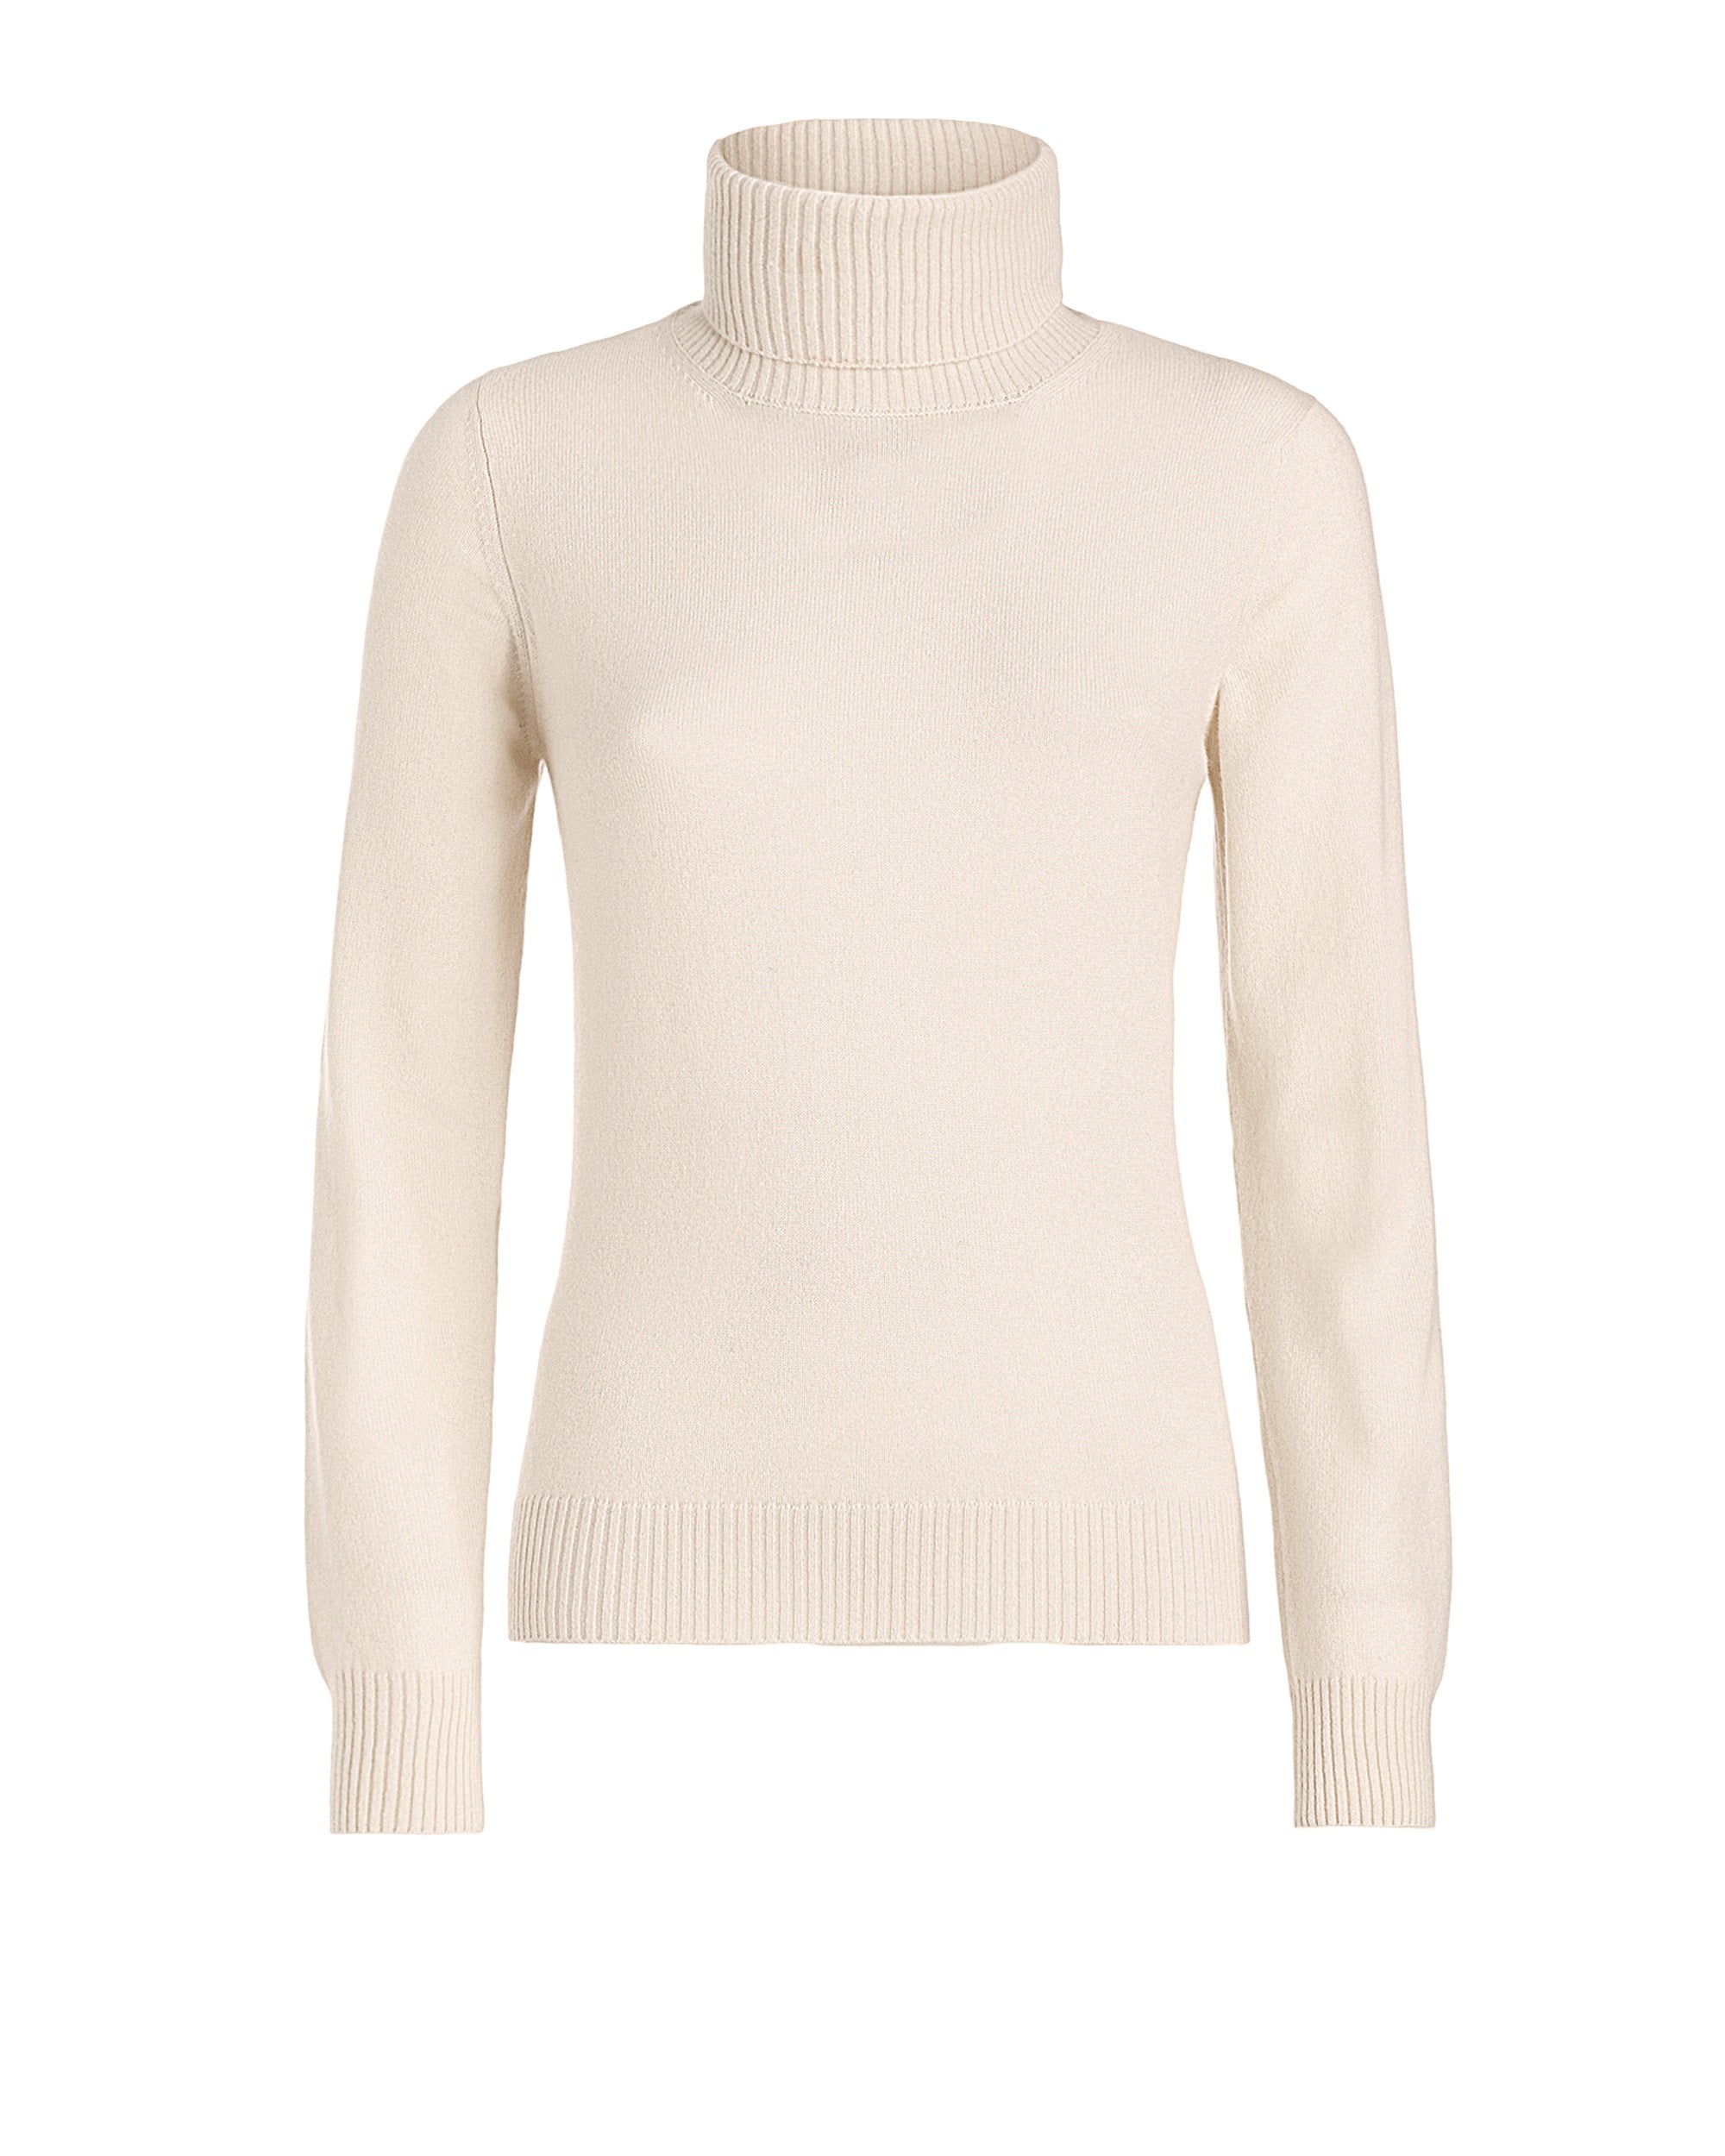 Natural beige kid cashmere turtleneck sweater